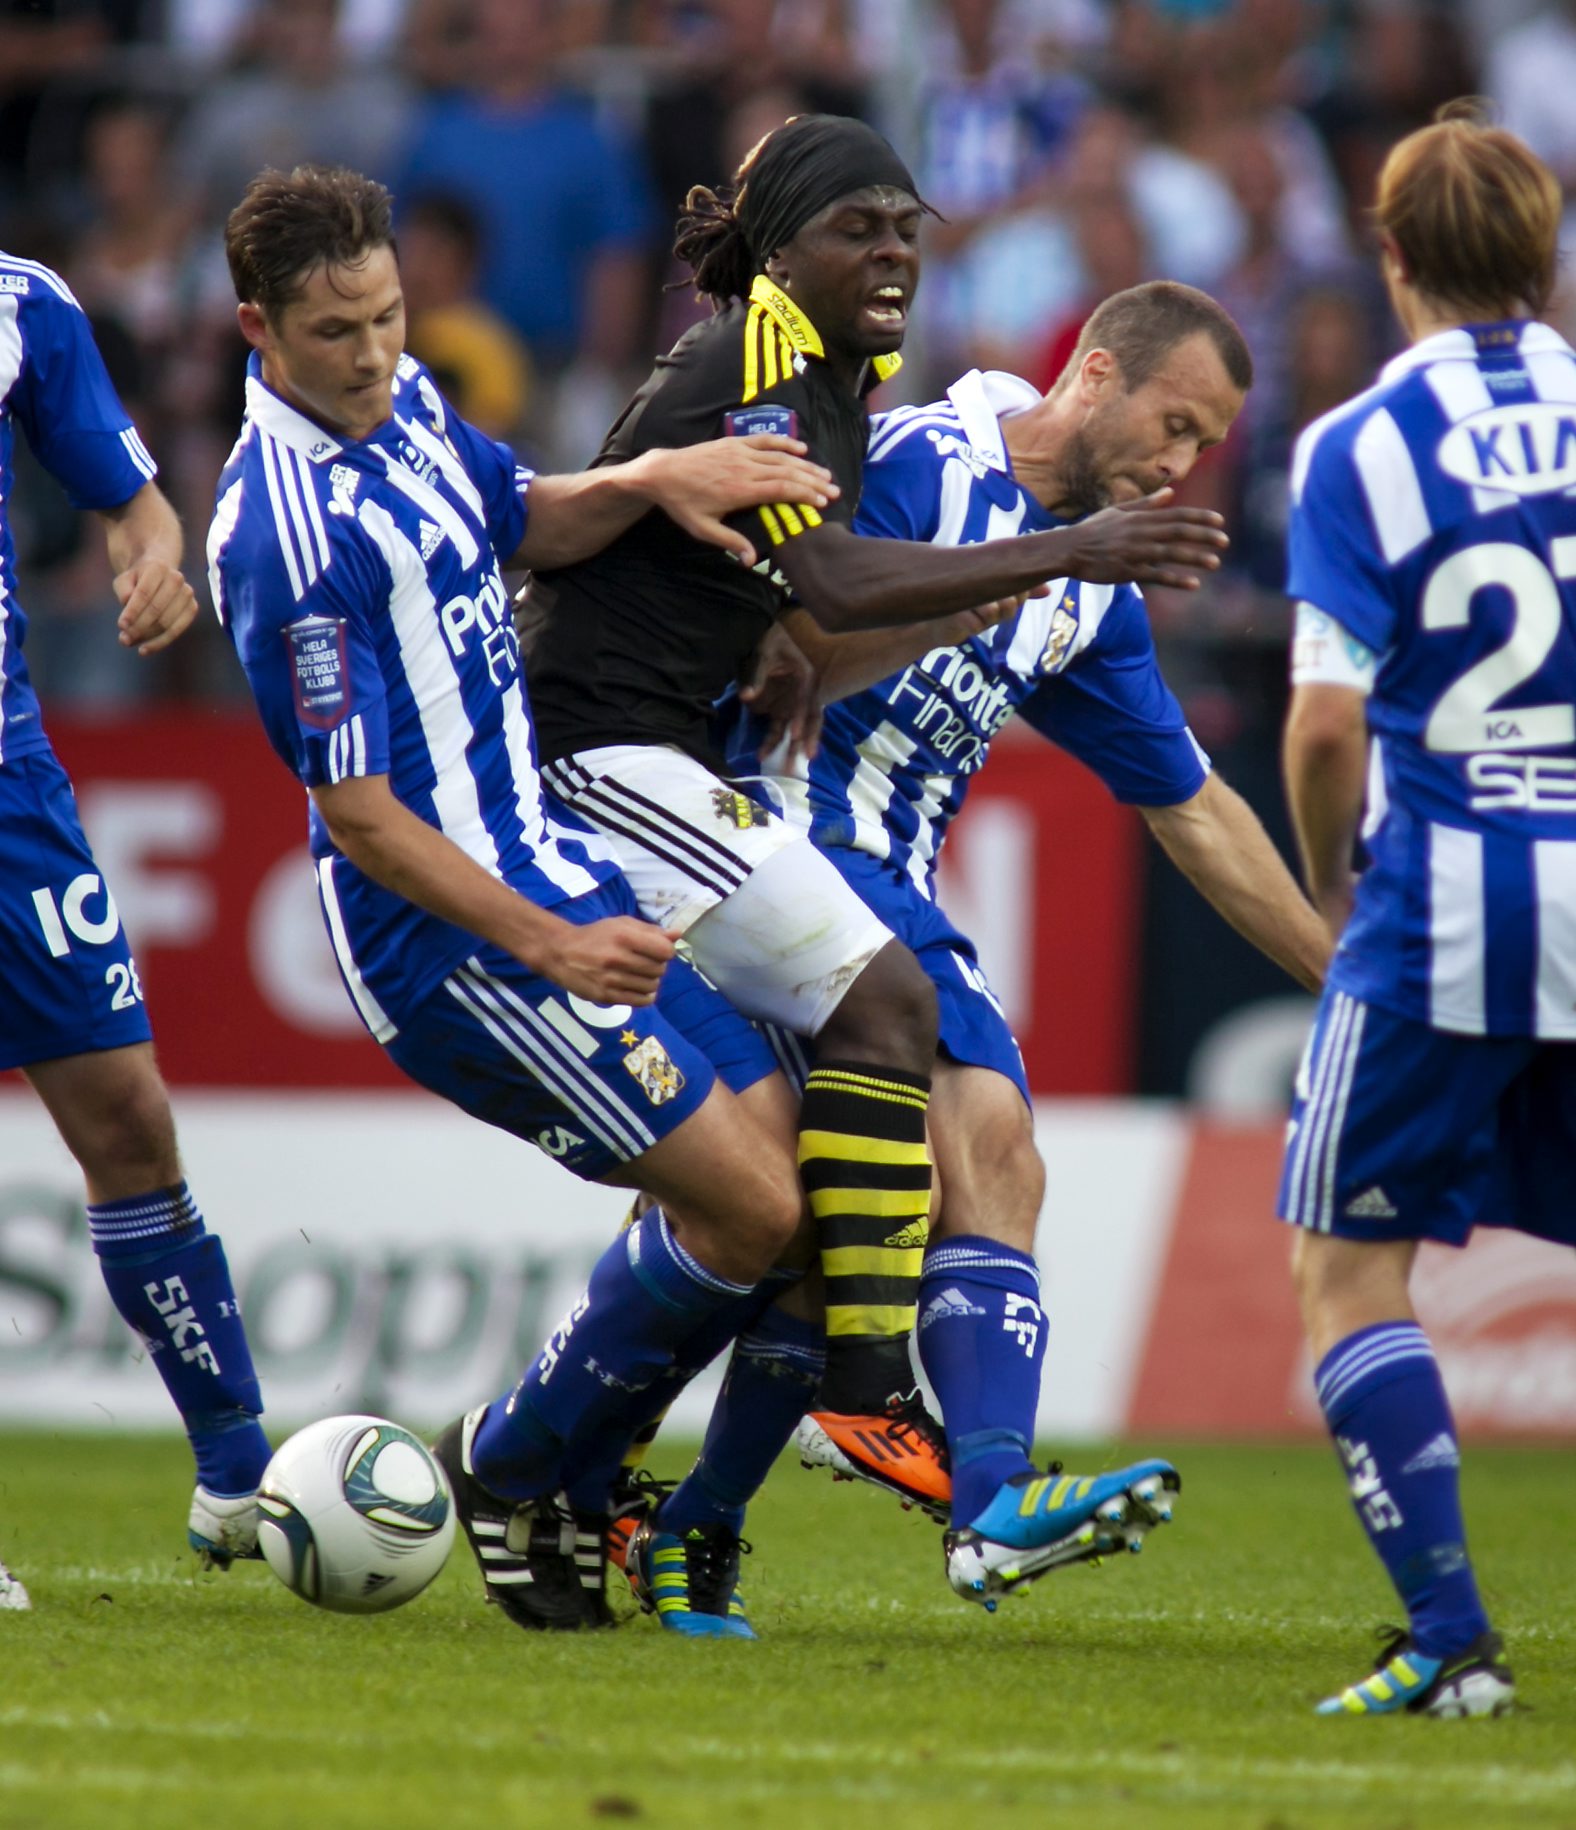 Den 24-årige mittfältaren gick hårt åt bland andra Martin Mutumba i debutmatchen mot AIK.